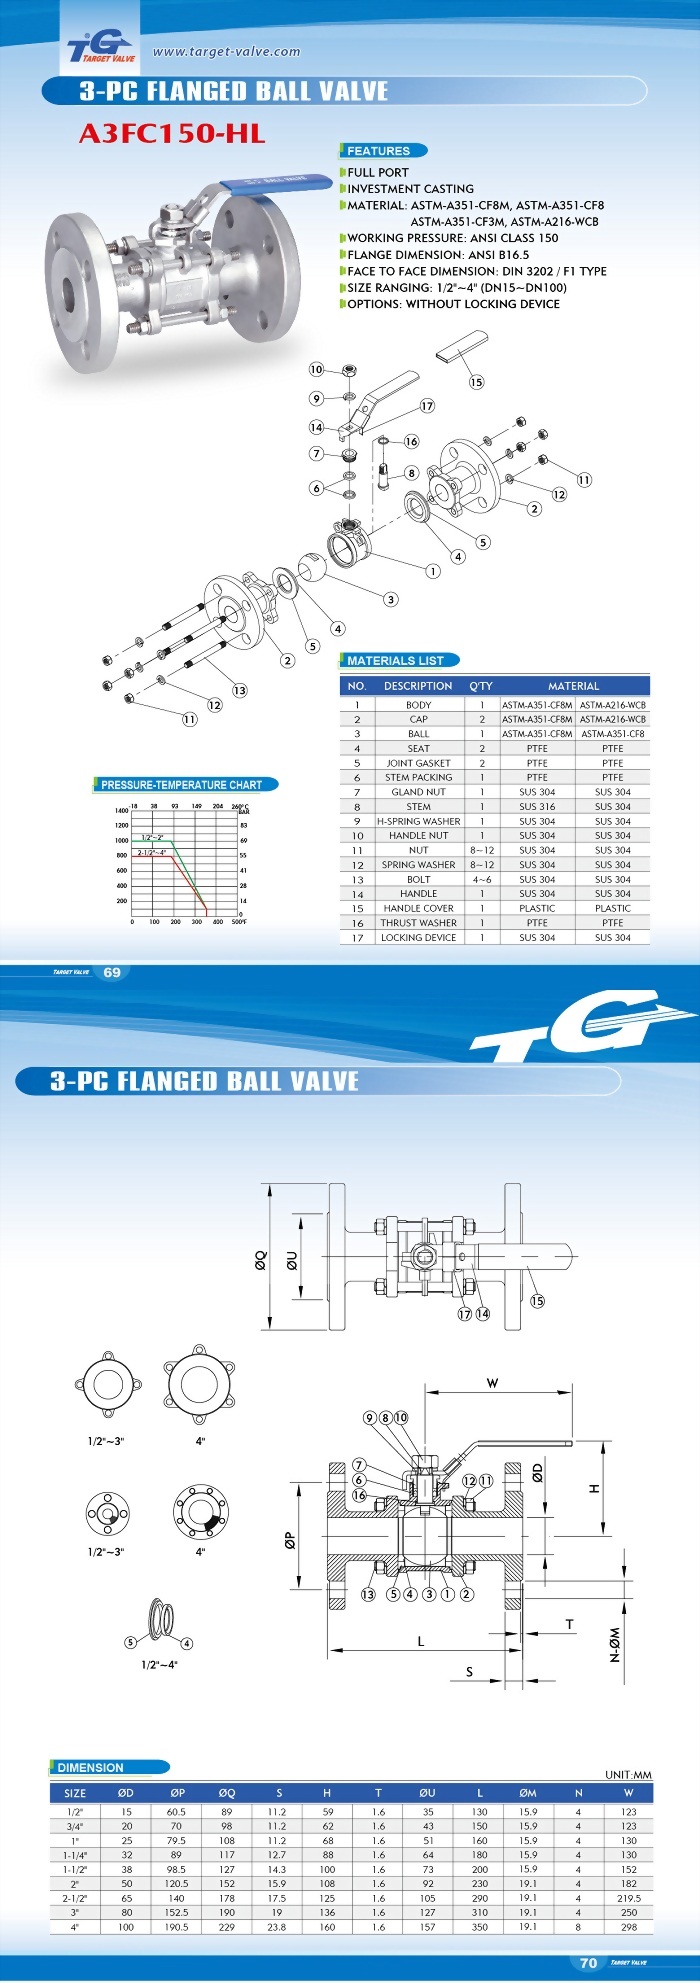 3 PC FLANGED BALL VALVE - A3FC150